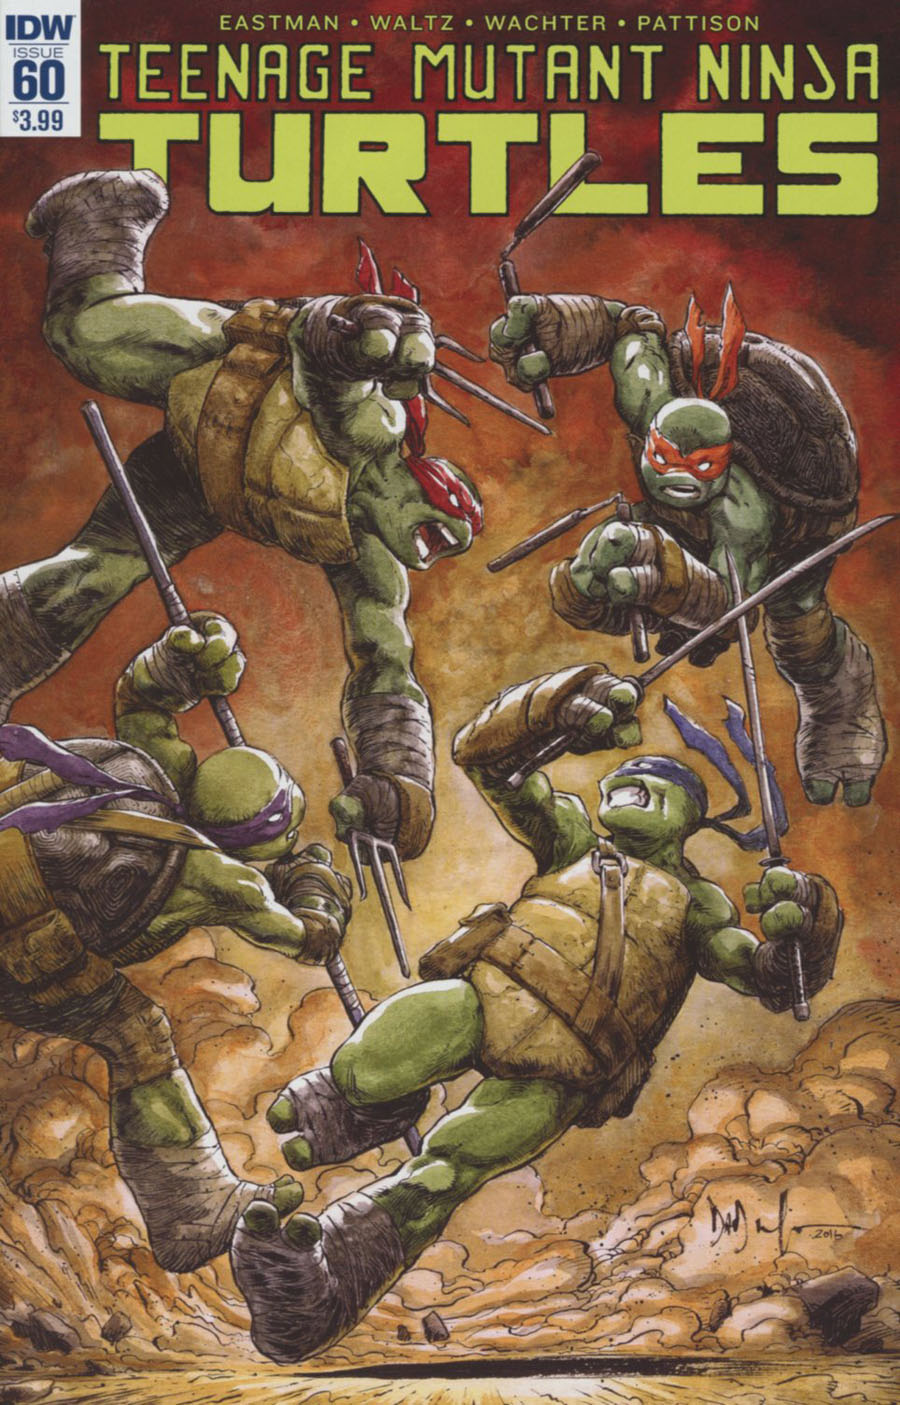 Teenage Mutant Ninja Turtles Vol 5 #60 Cover A Regular Dave Wachter Cover